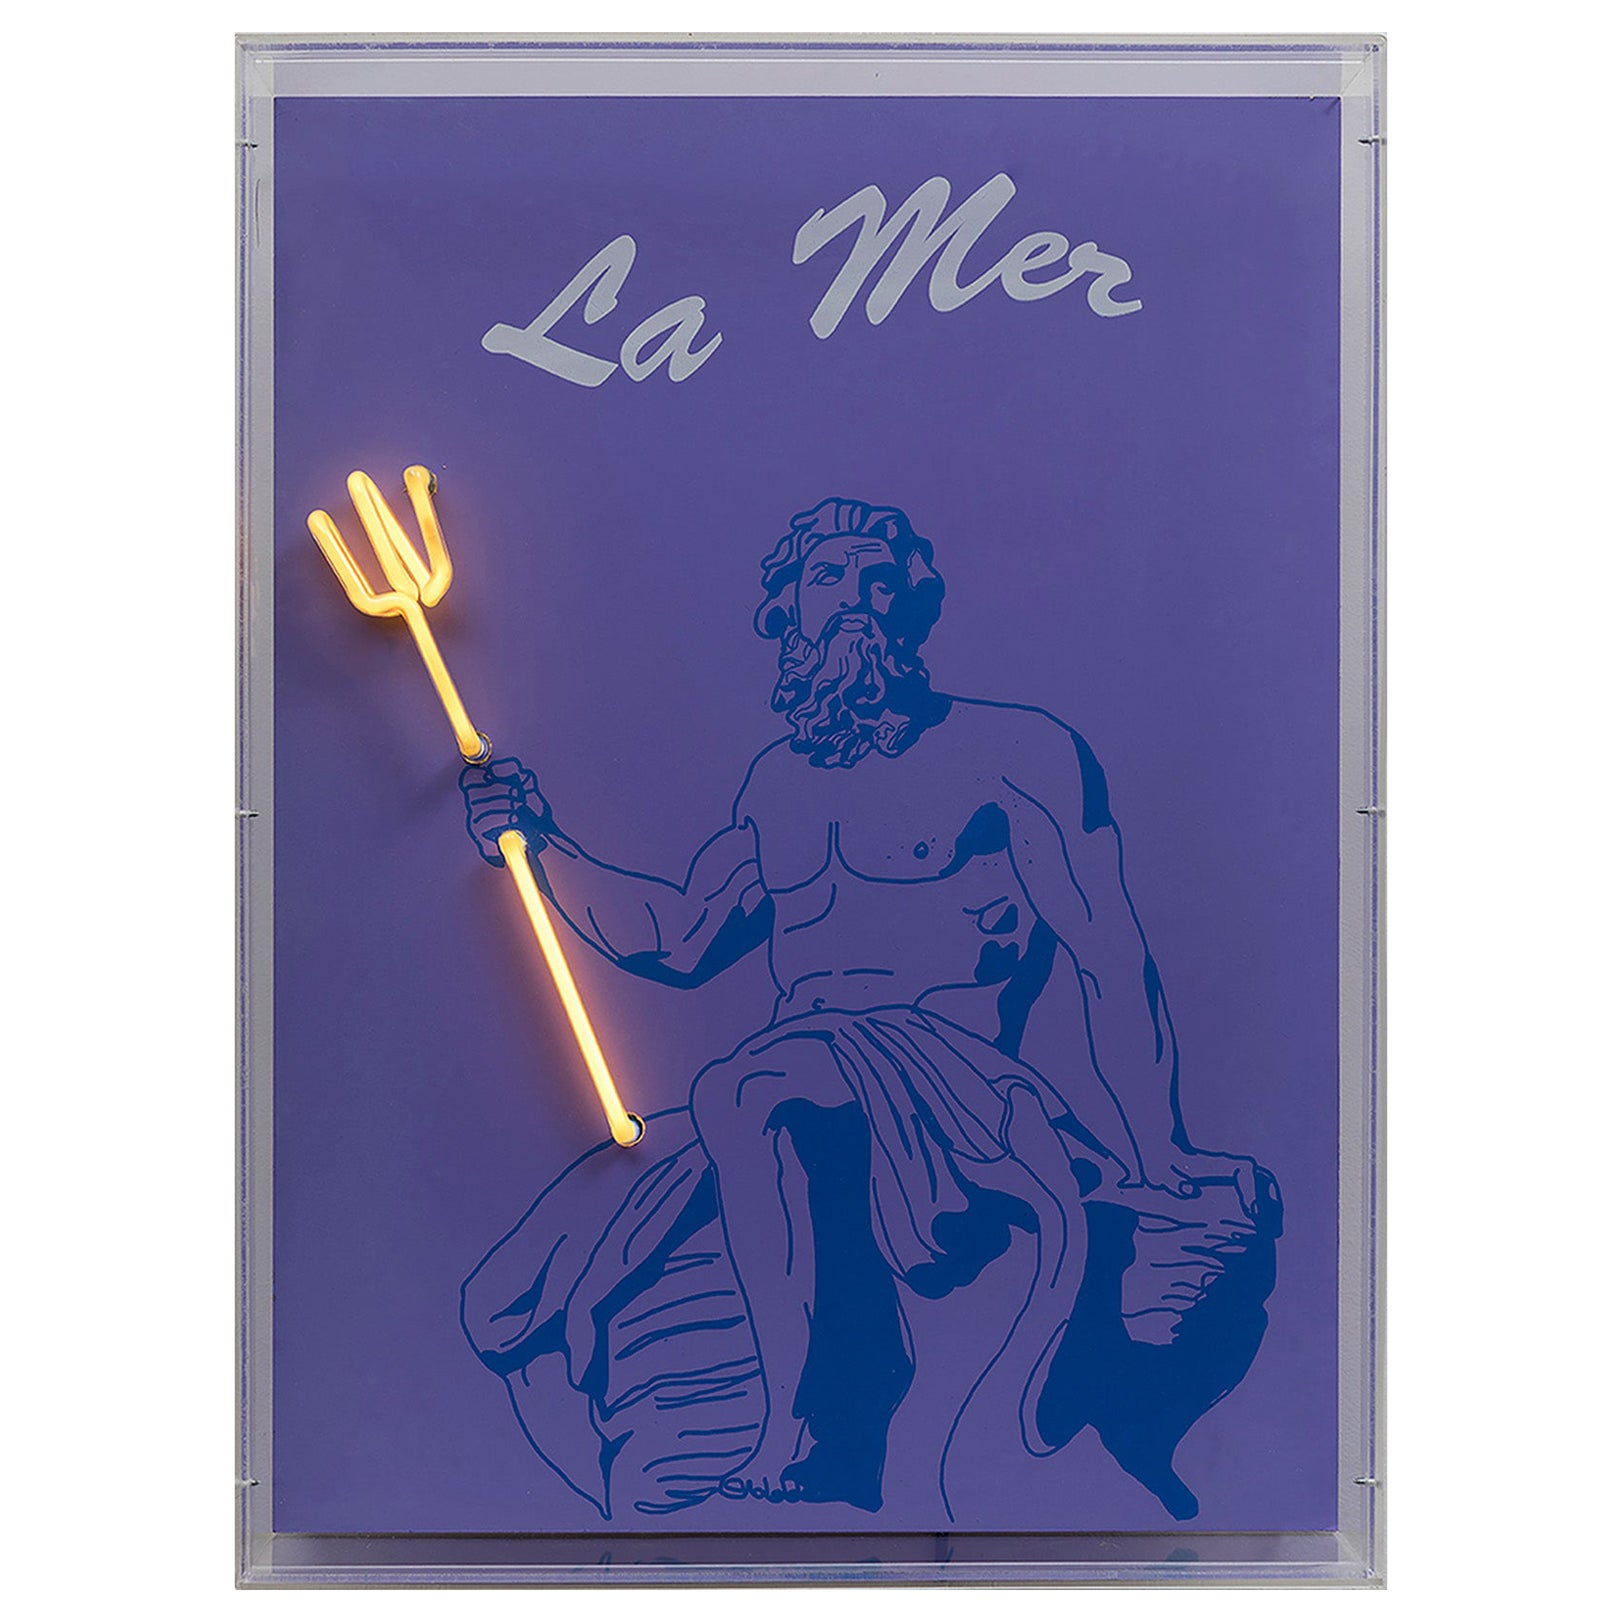 La Mer Poseidon. Neon-Lichtkasten Wandskulptur. Aus der Serie Neon Classics